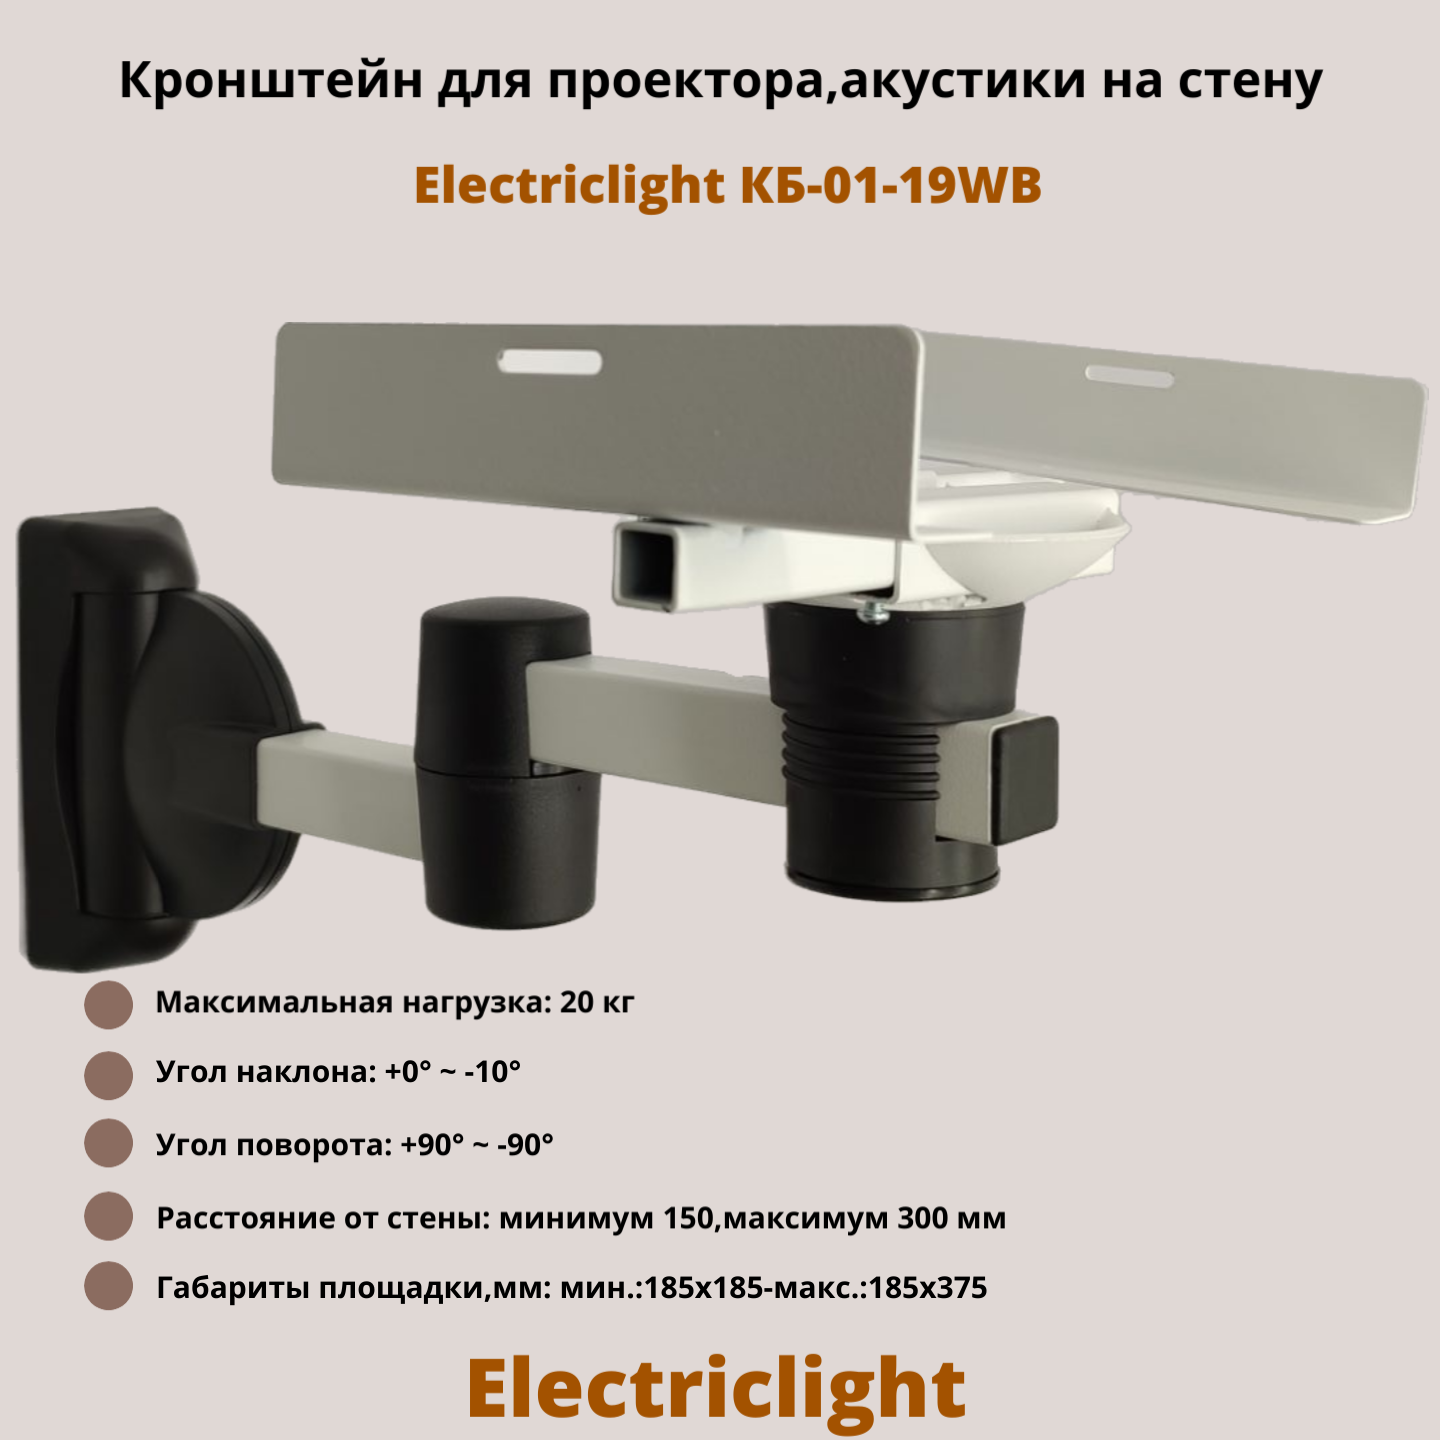 Кронштейн для проектора акустики на стену наклонно-поворотный Electriclight КБ-01-19MB металлик/черный